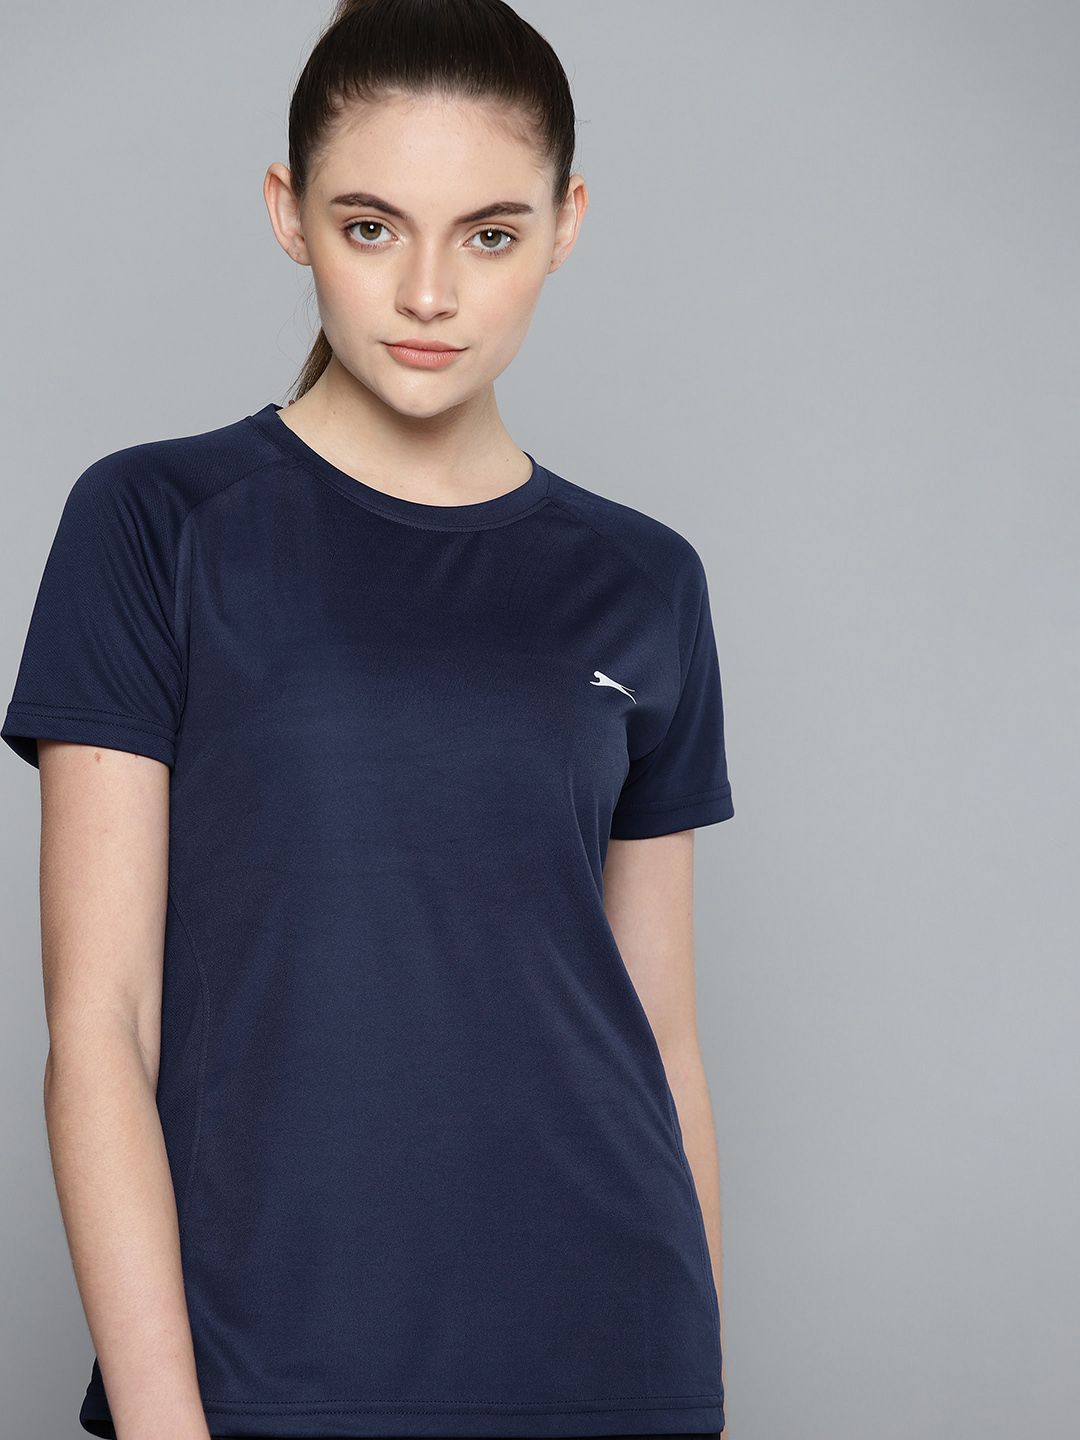 Slazenger Women Navy Blue Slim Tapered Fit  Active T-shirt Price in India